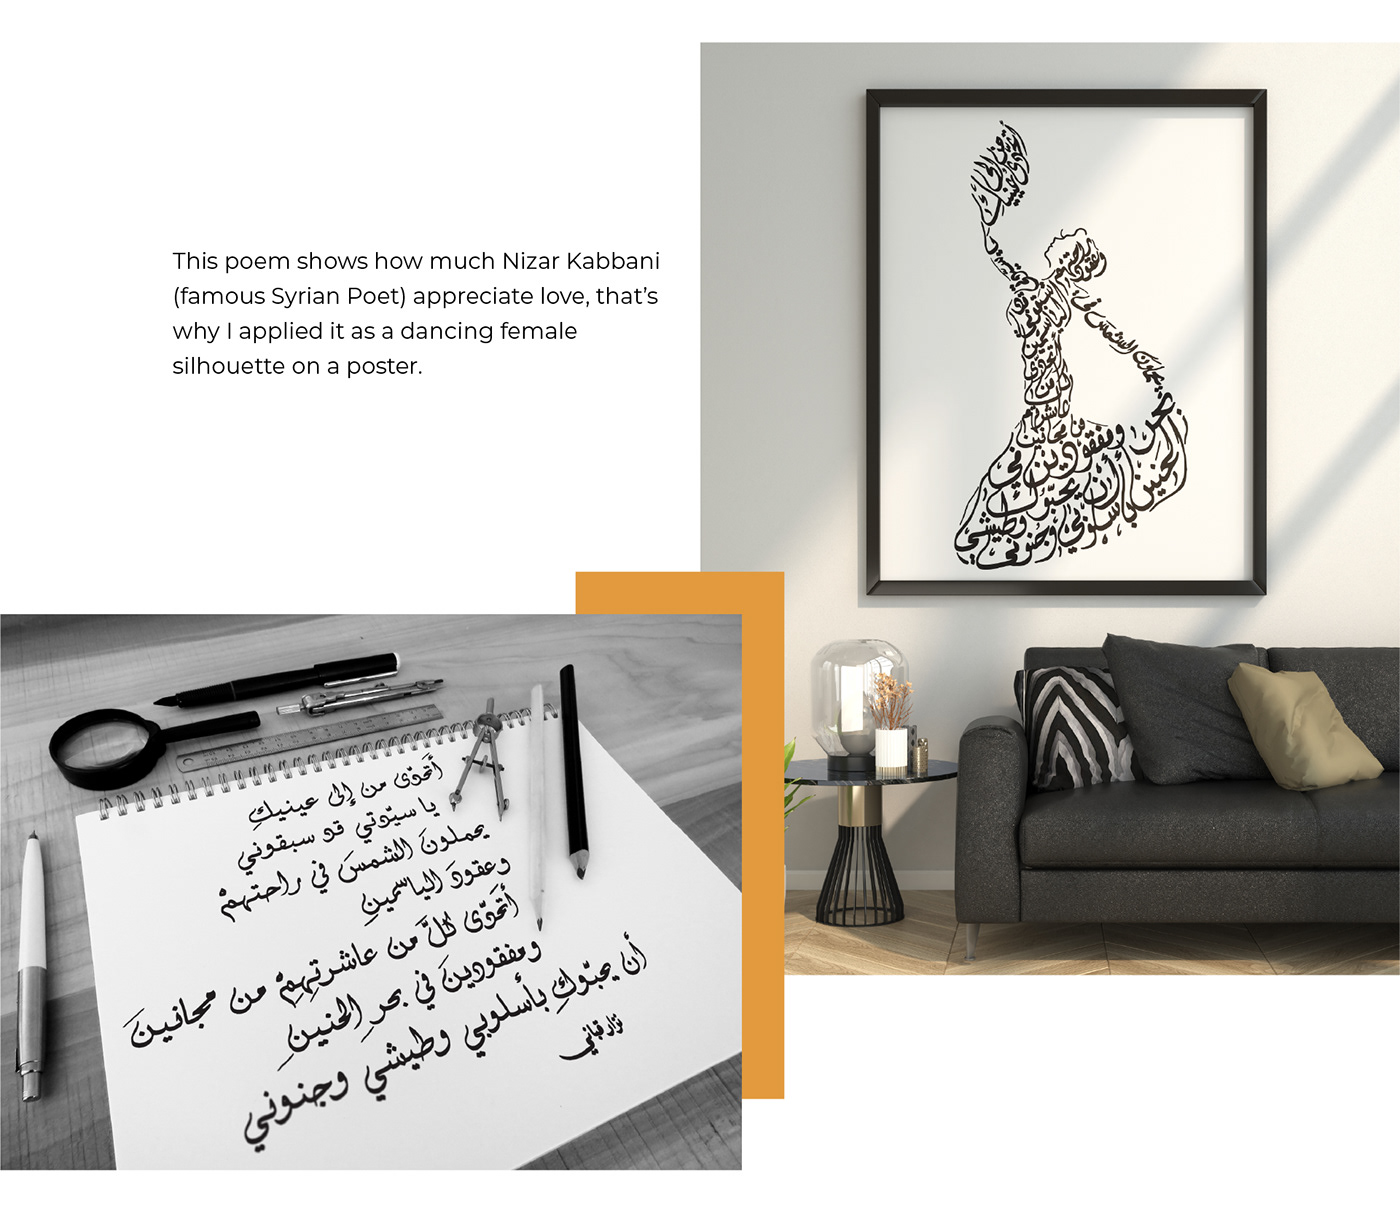 visual identity adobe illustrator handwriting arabic calligraphy lettering Handlettering diwani kufic calligraphy art Behance